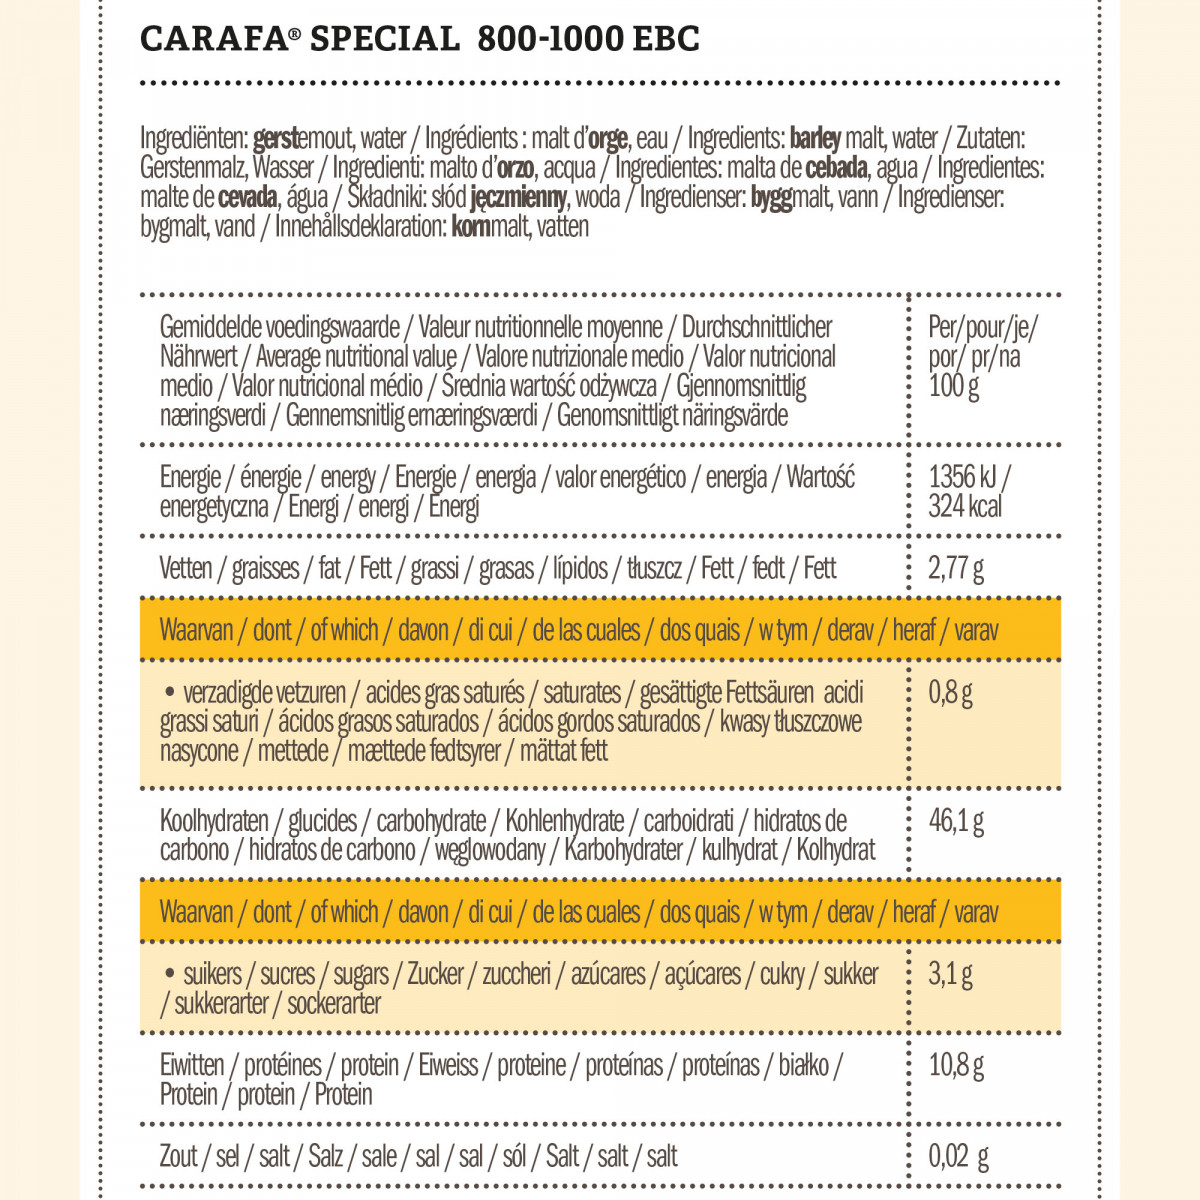 Weyermann® Carafa® Special type 1 800-1000 EBC 1 kg